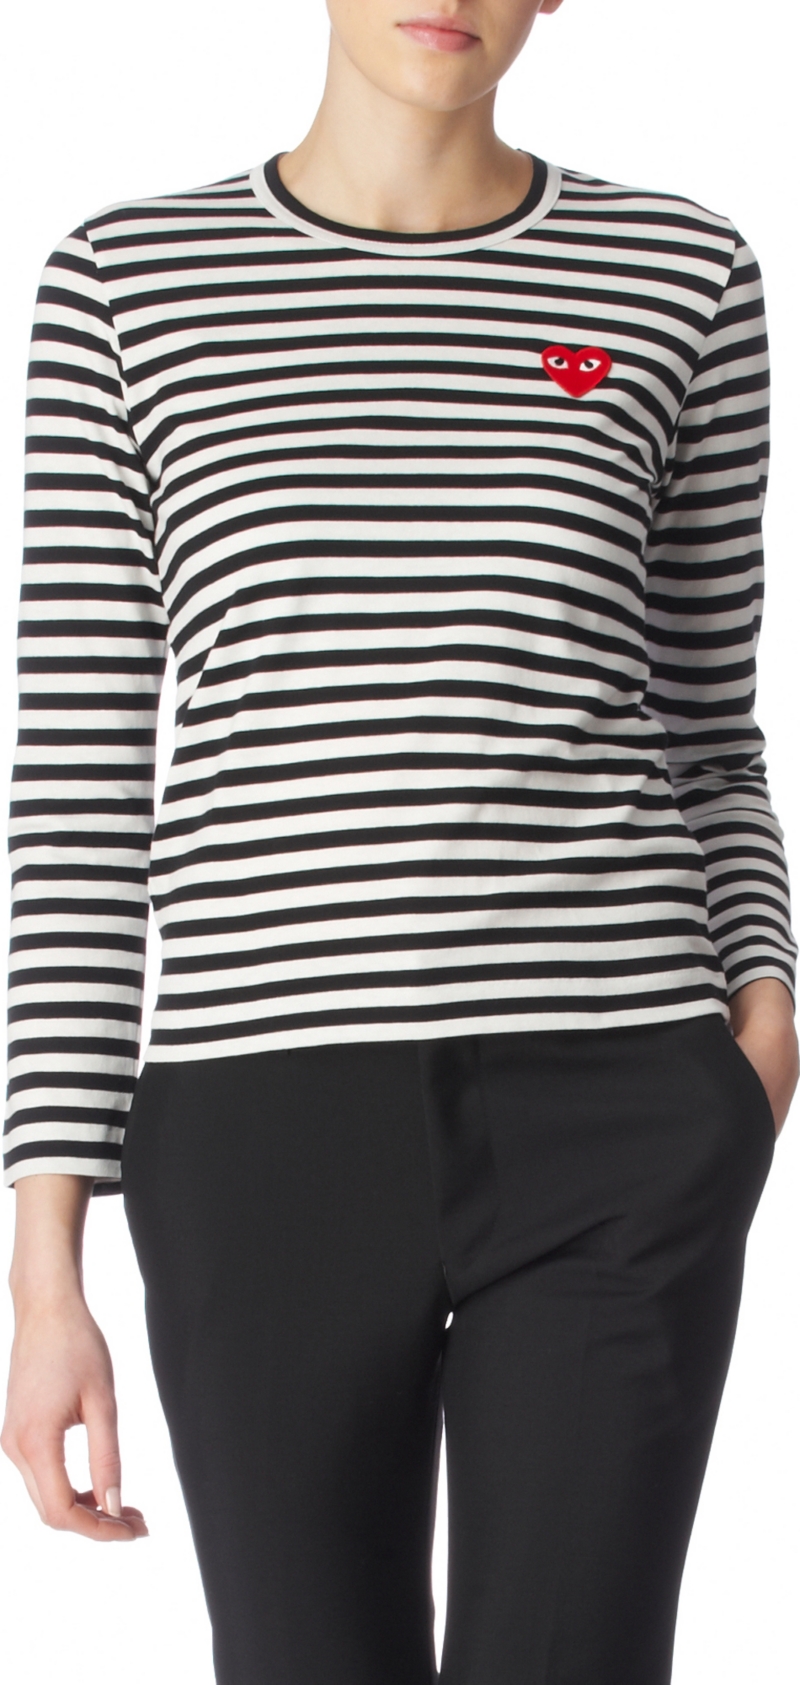 Striped heart top   PLAY   Long sleeve tops   Tops   Womenswear 